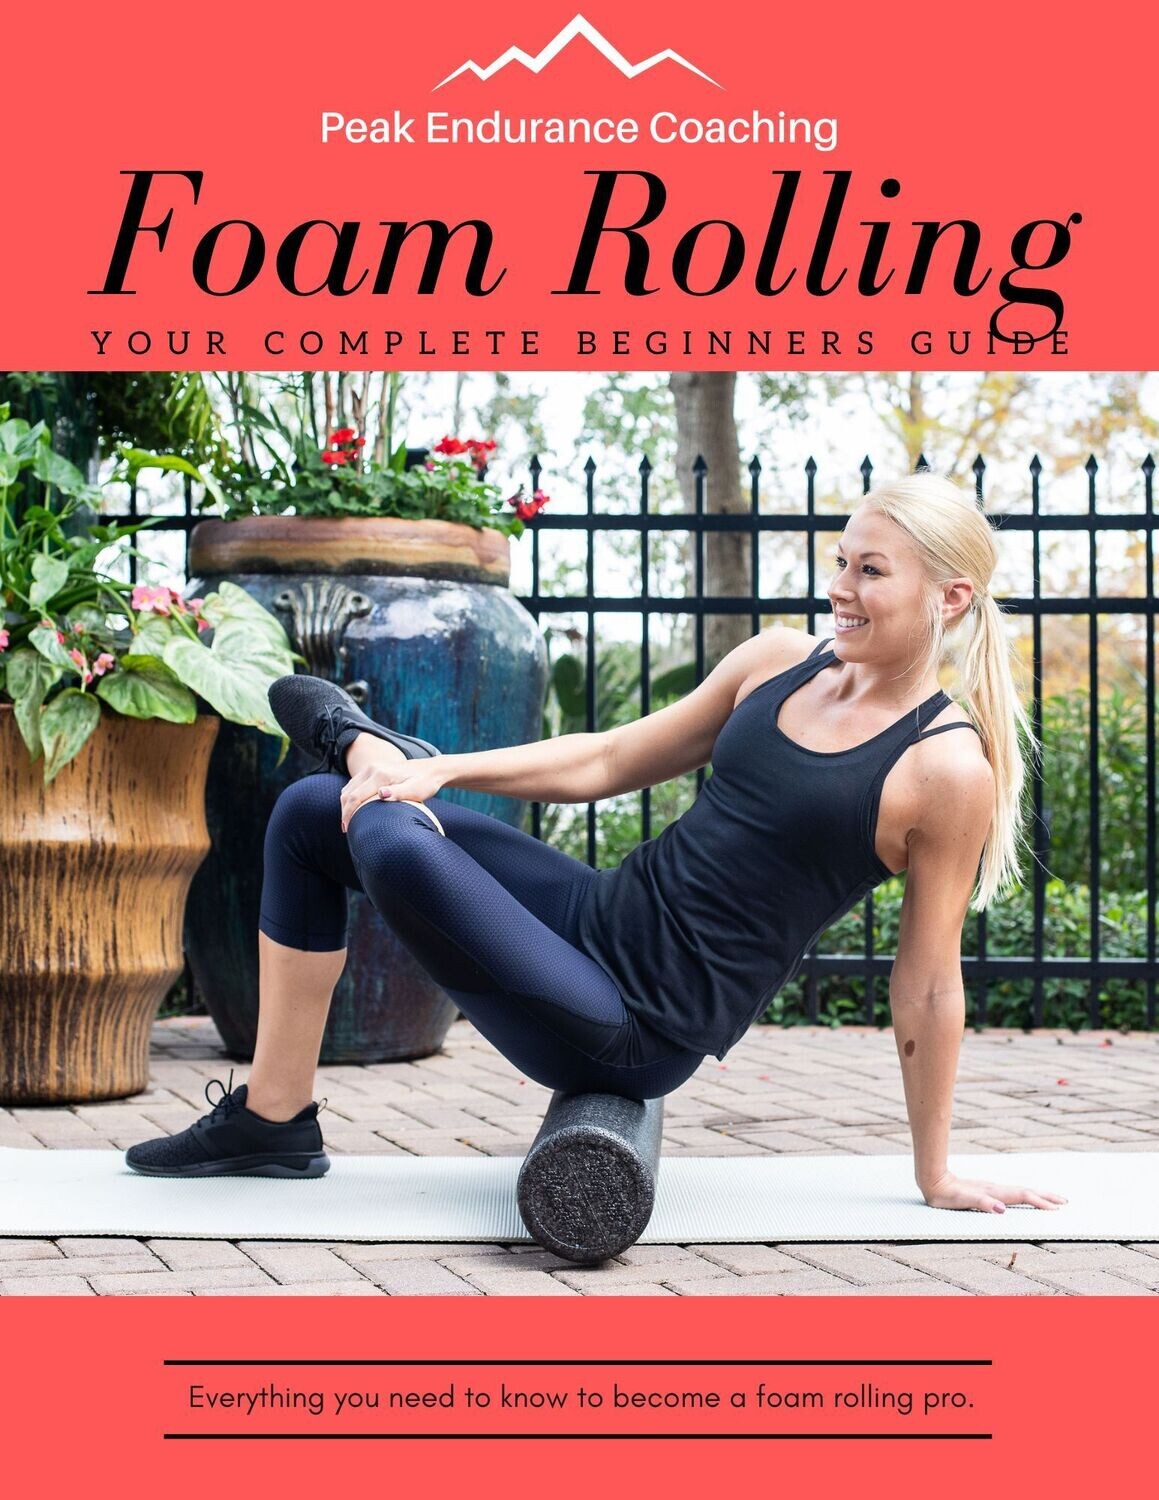 Peak Endurance Coaching Beginner's Guide to Foam Rolling.